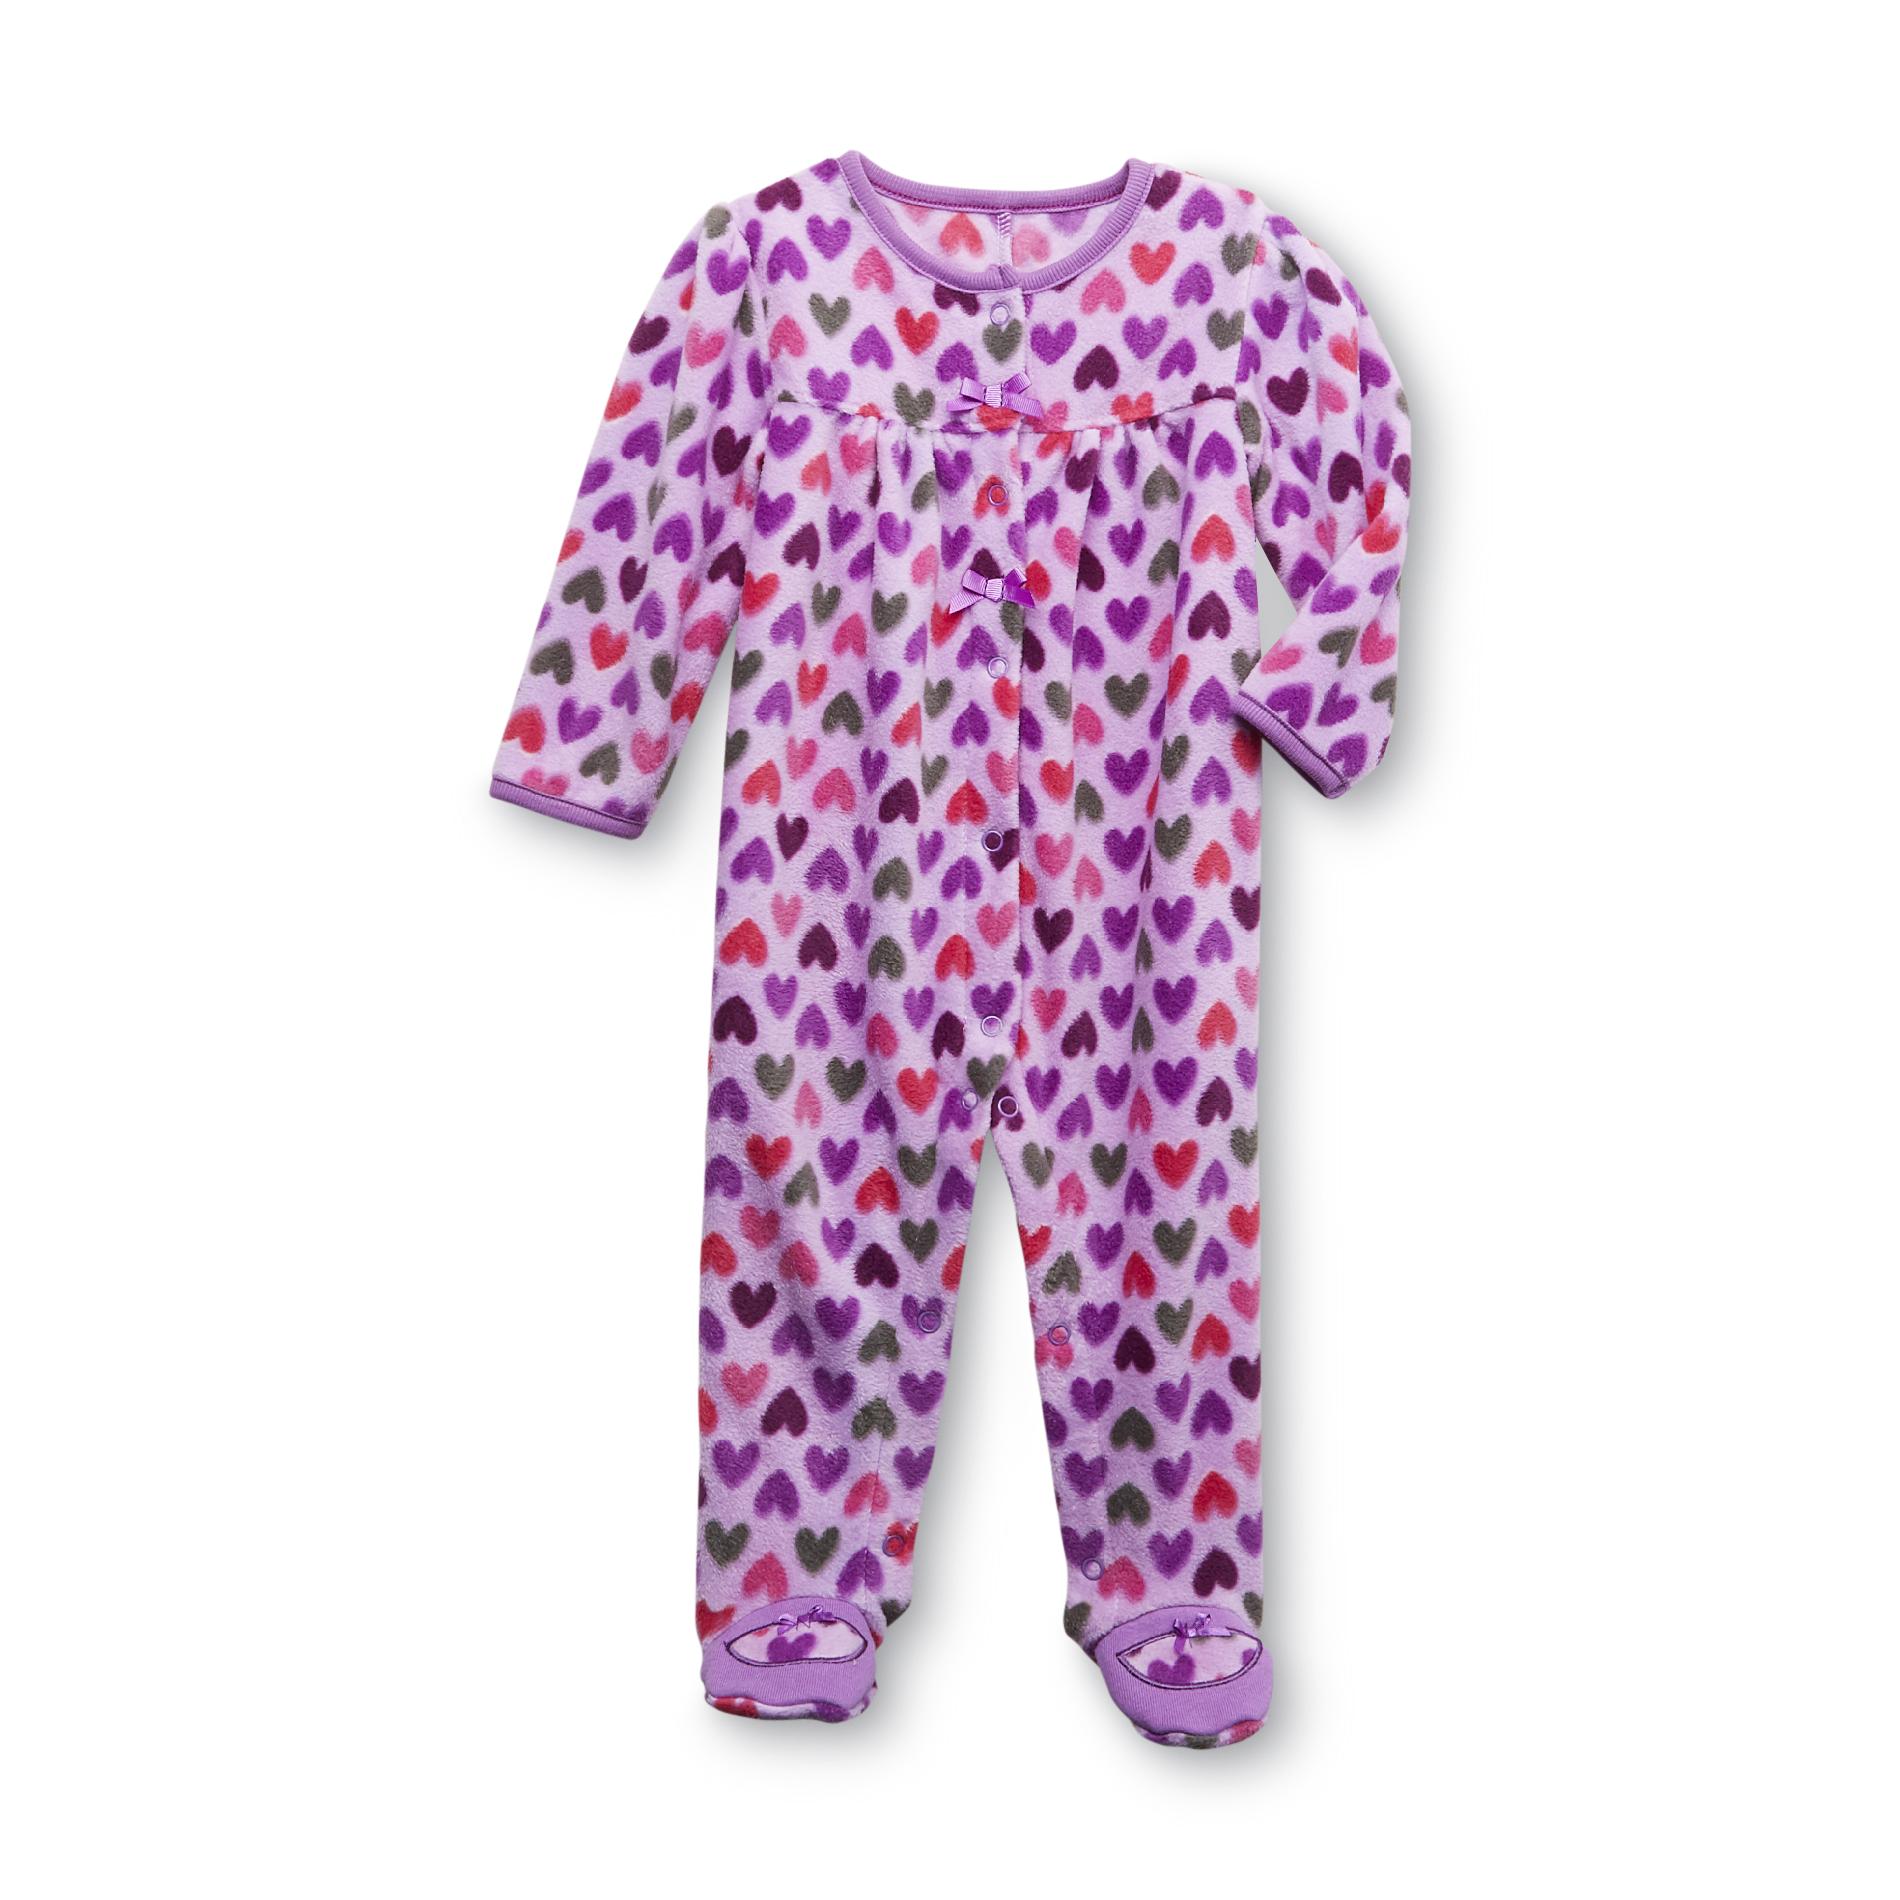 Little Wonders Newborn Girl's Footed Pajamas - Hearts